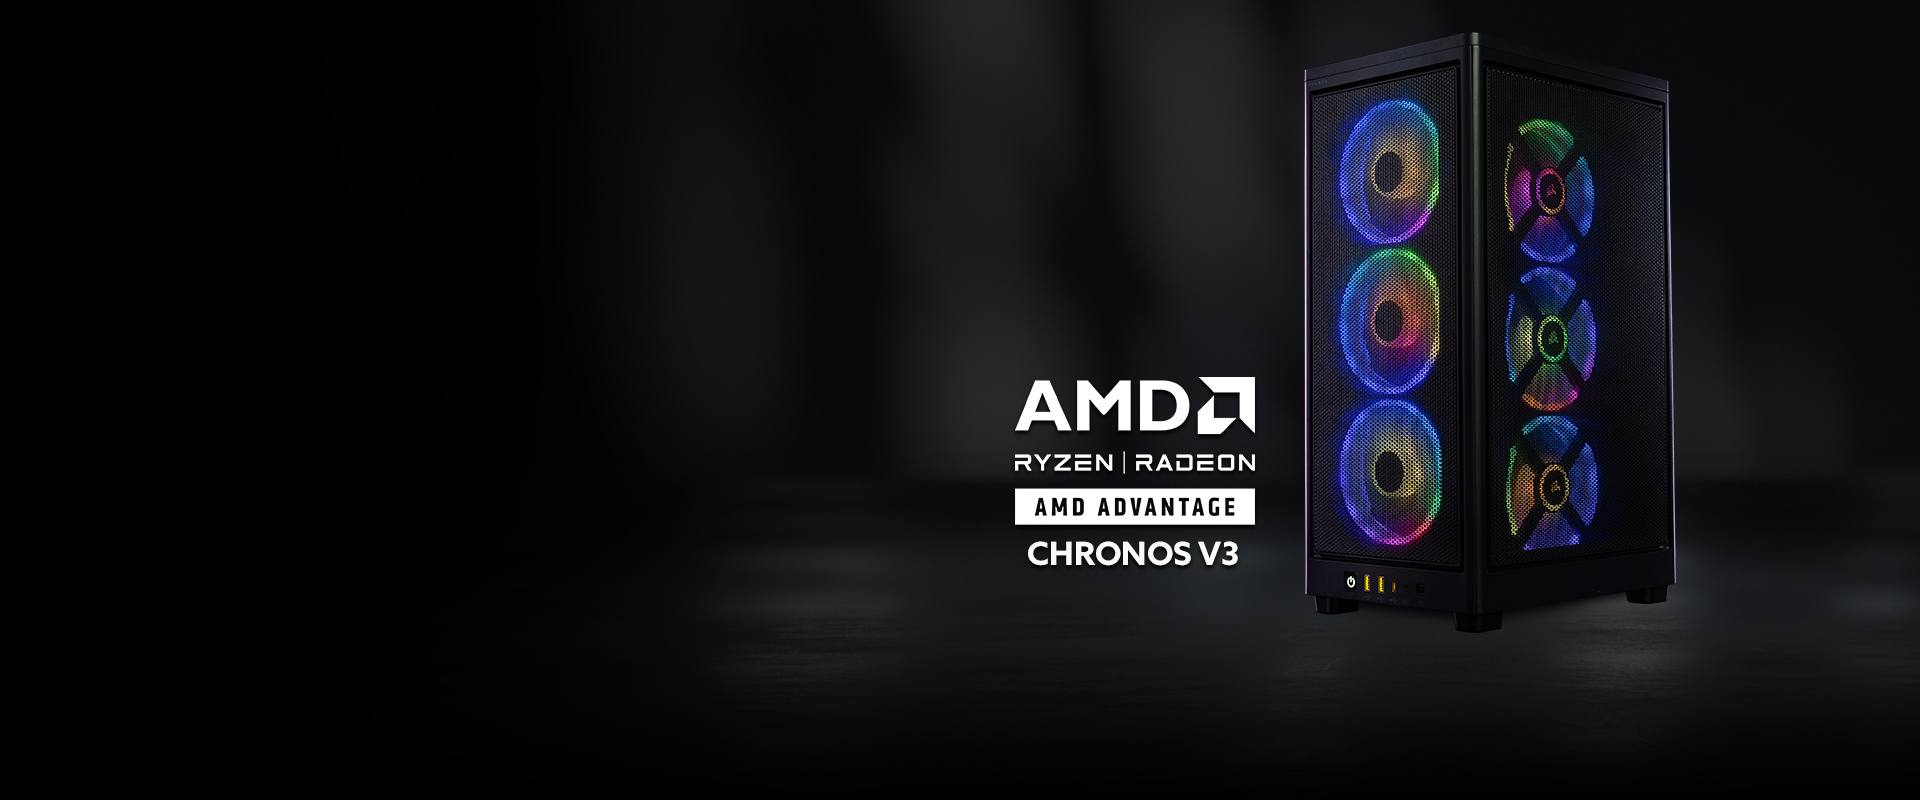 AMD Advantage CHRONOS V3